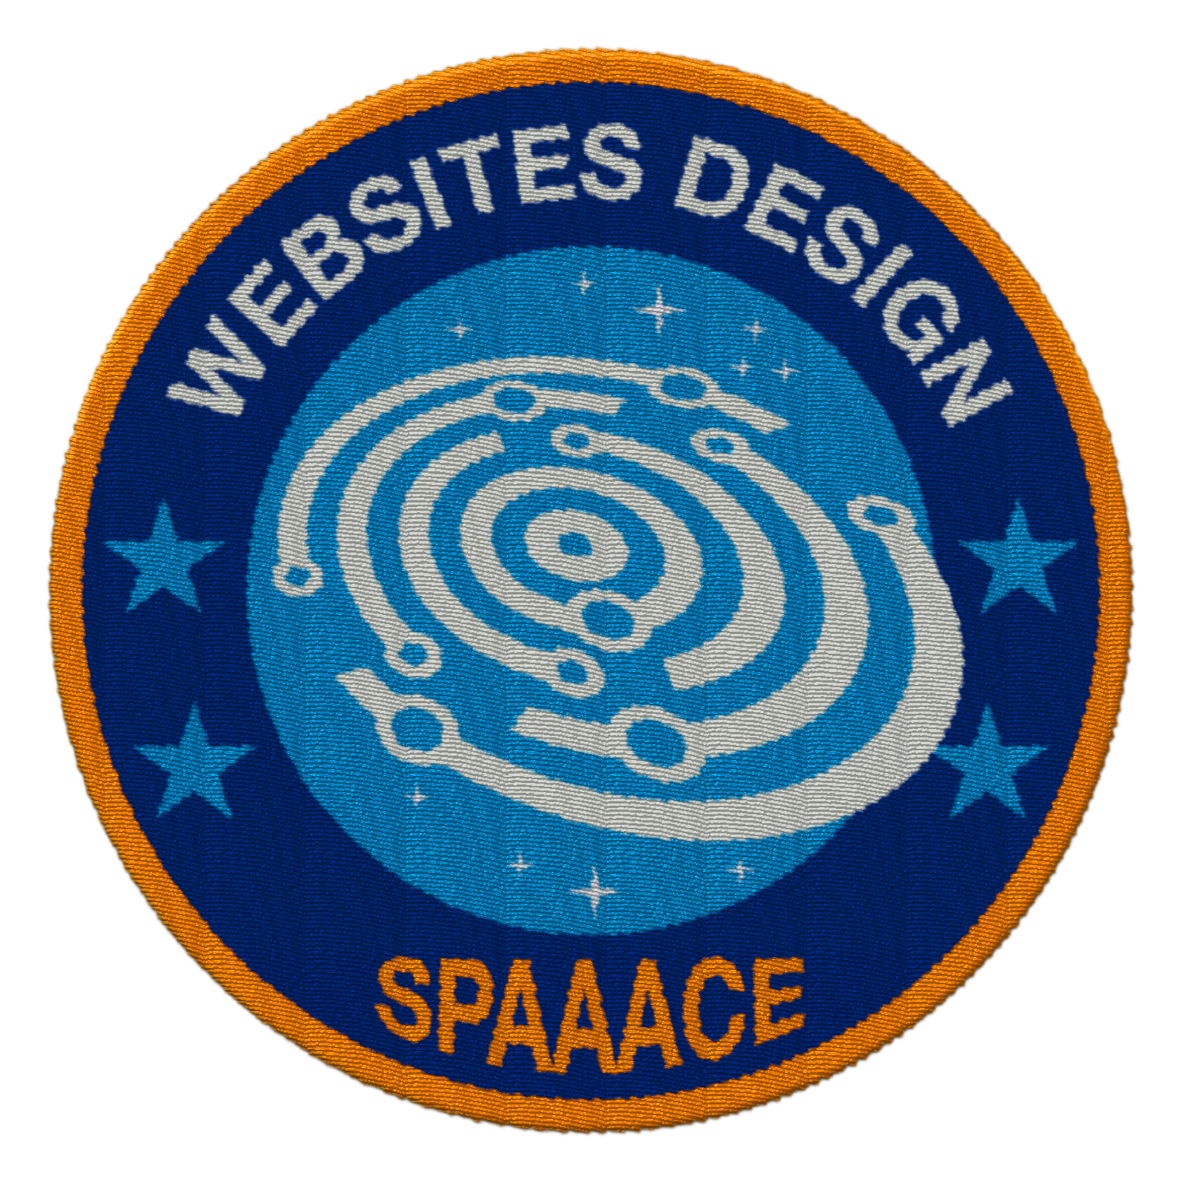 Spaaace - patch websites design